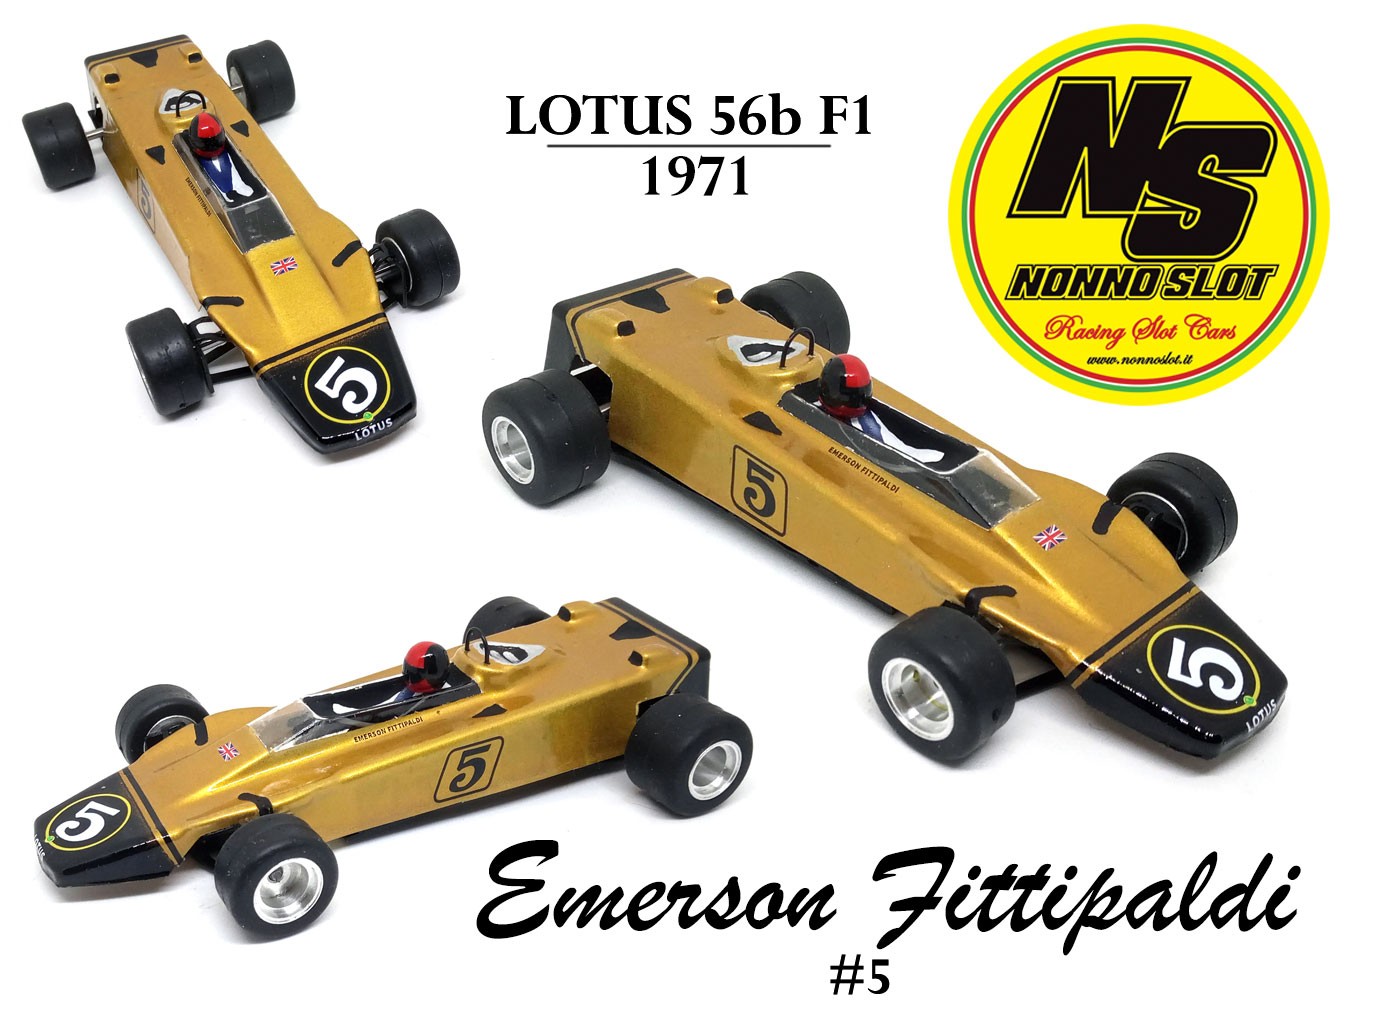 Lotus 56b 1971 Emerson Fittipaldi